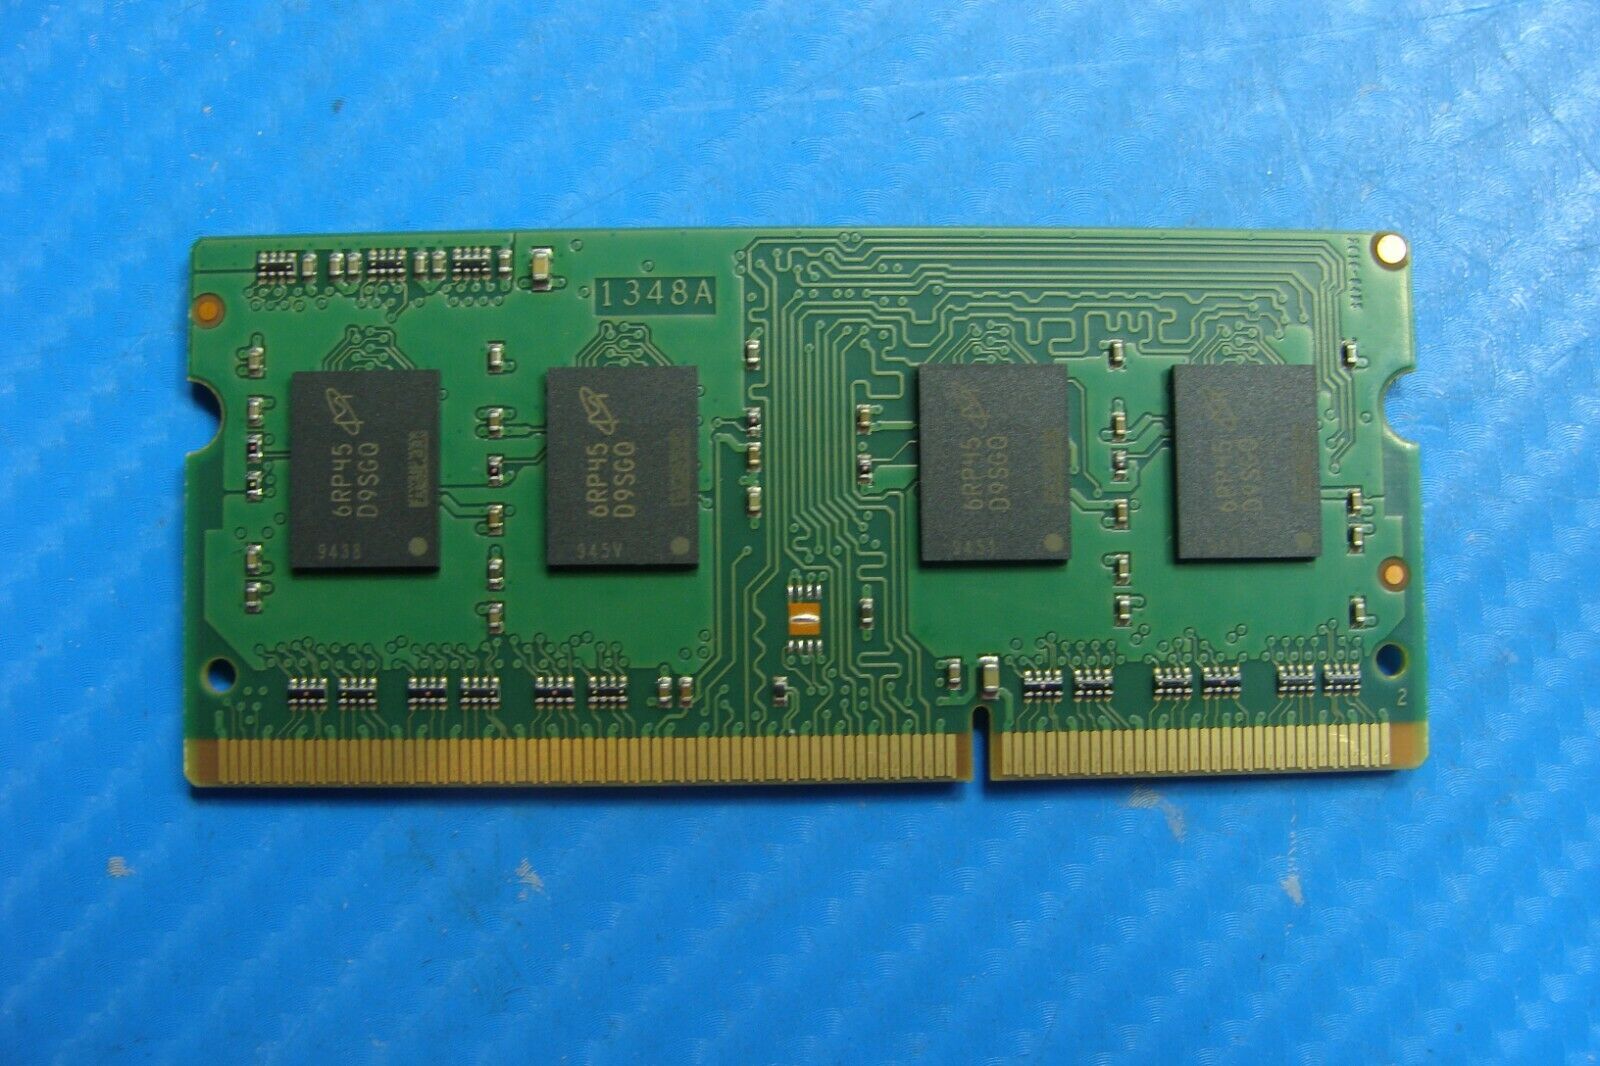 Dell 15 5559 Micron 4Gb Memory Ram So-Dimm pc3l-12800s mt8ktf51264hz-1g6p1 